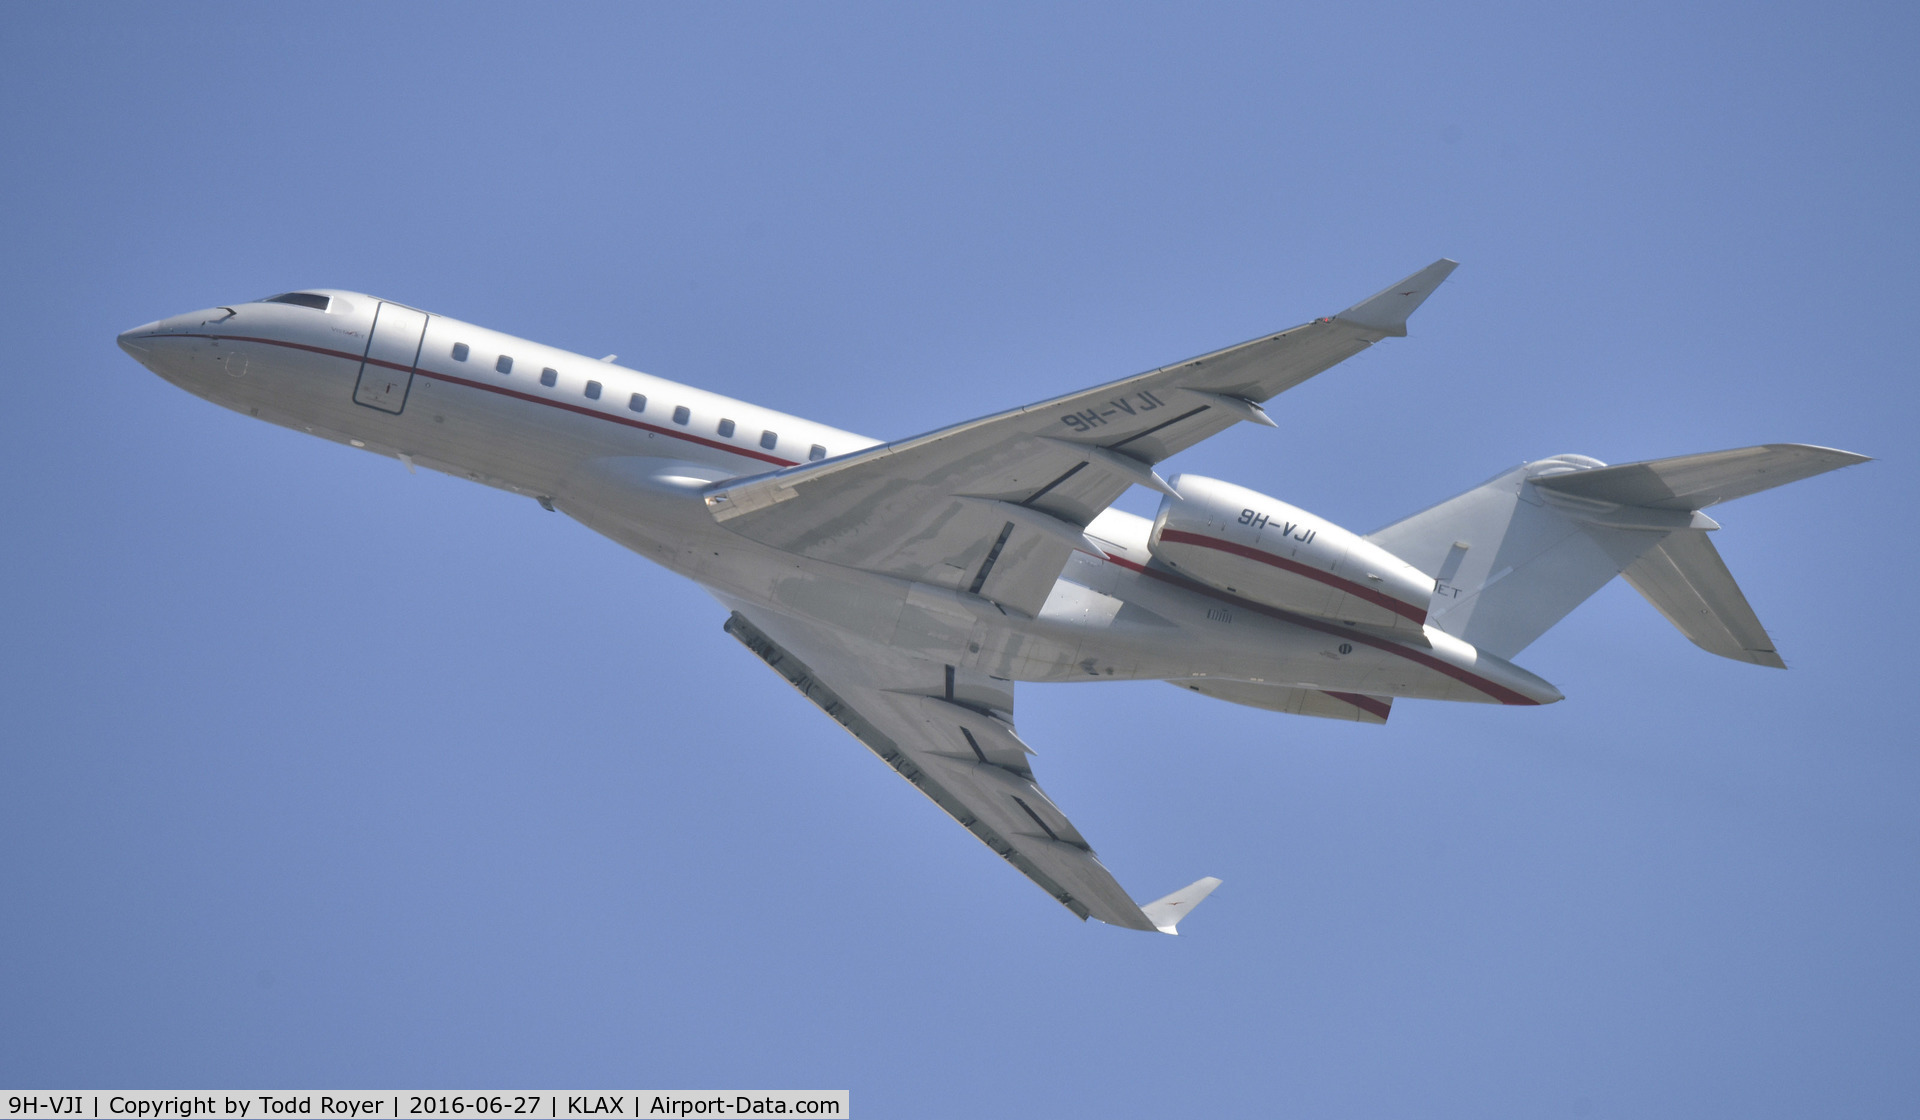 9H-VJI, 2013 Bombardier BD-700-1A10 Global 6000 C/N 9593, Departing LAX